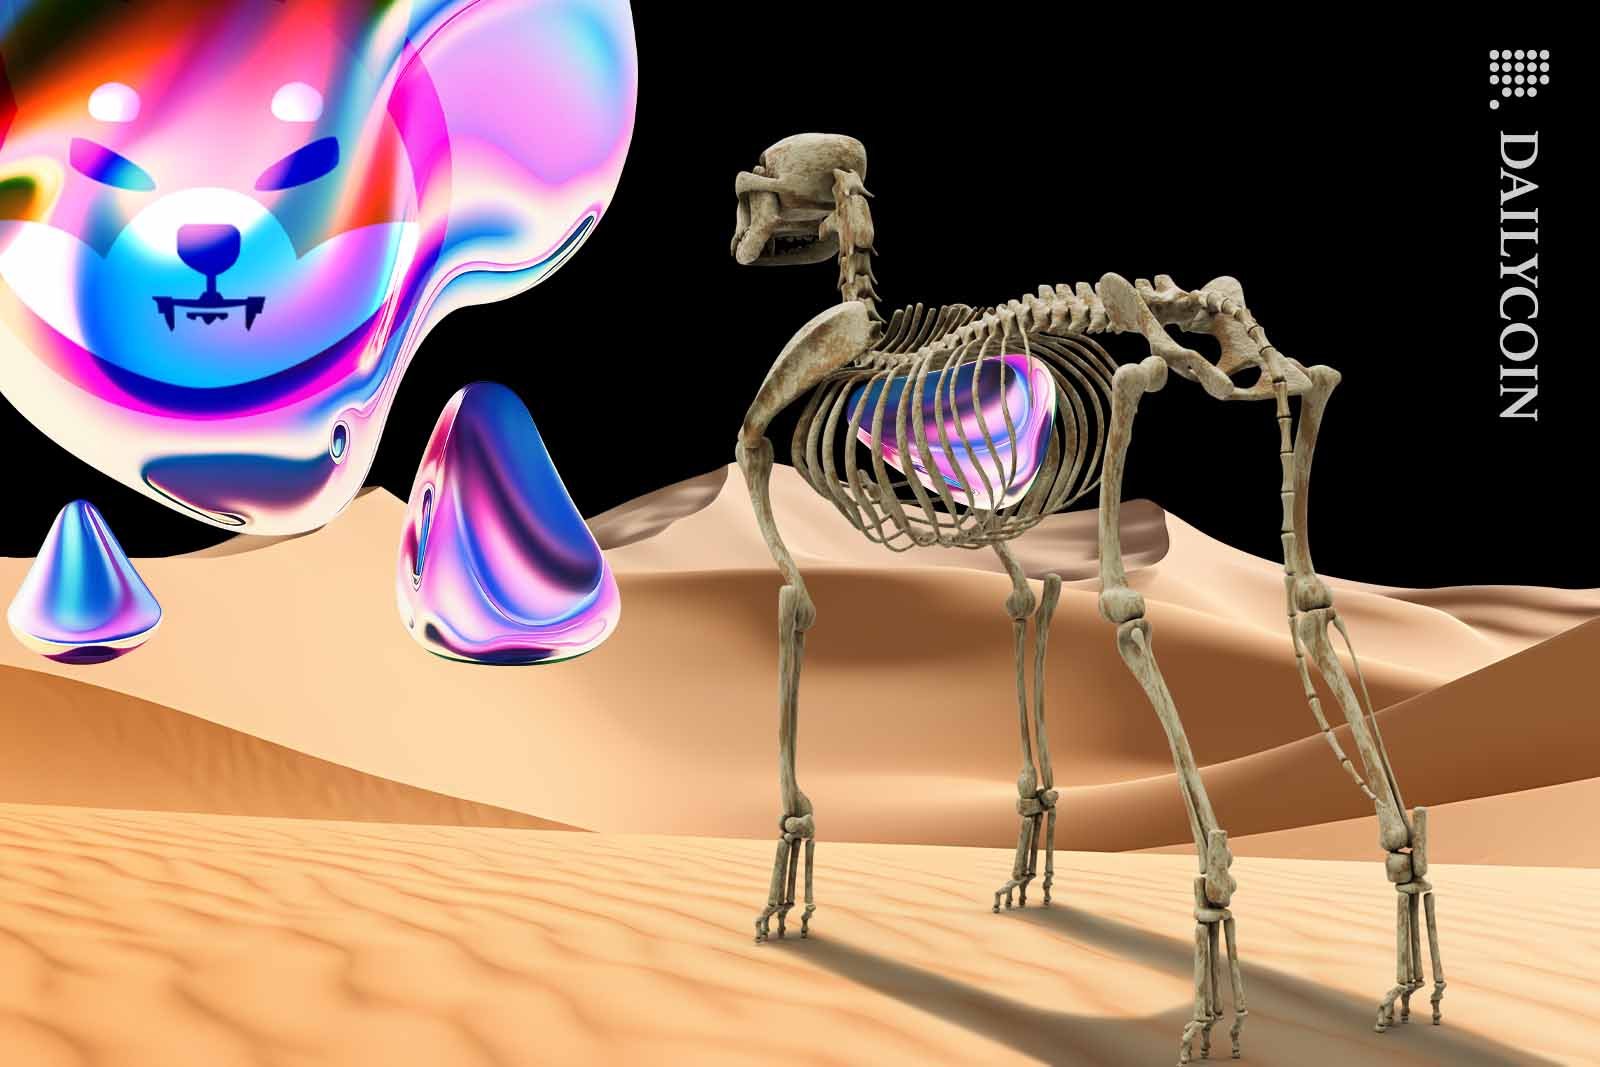 Dog skeleton staring at an iridescent shape in a desert.